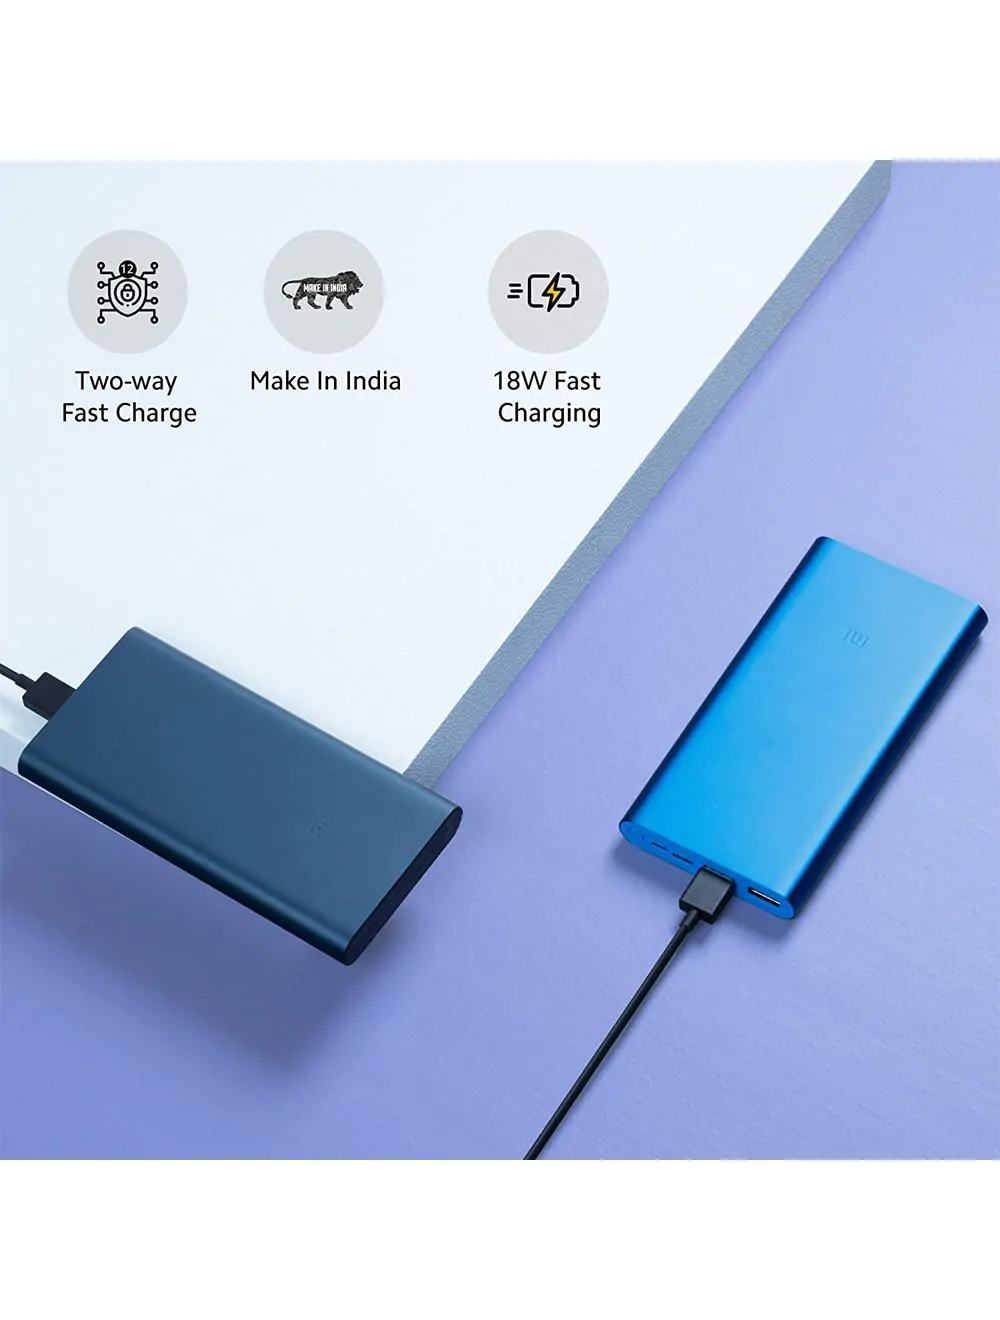 Mi Power Bank 3i 10000mAh Dual Output and Input Port 18W Fast Charging  (Metallic Blue) Power Bank